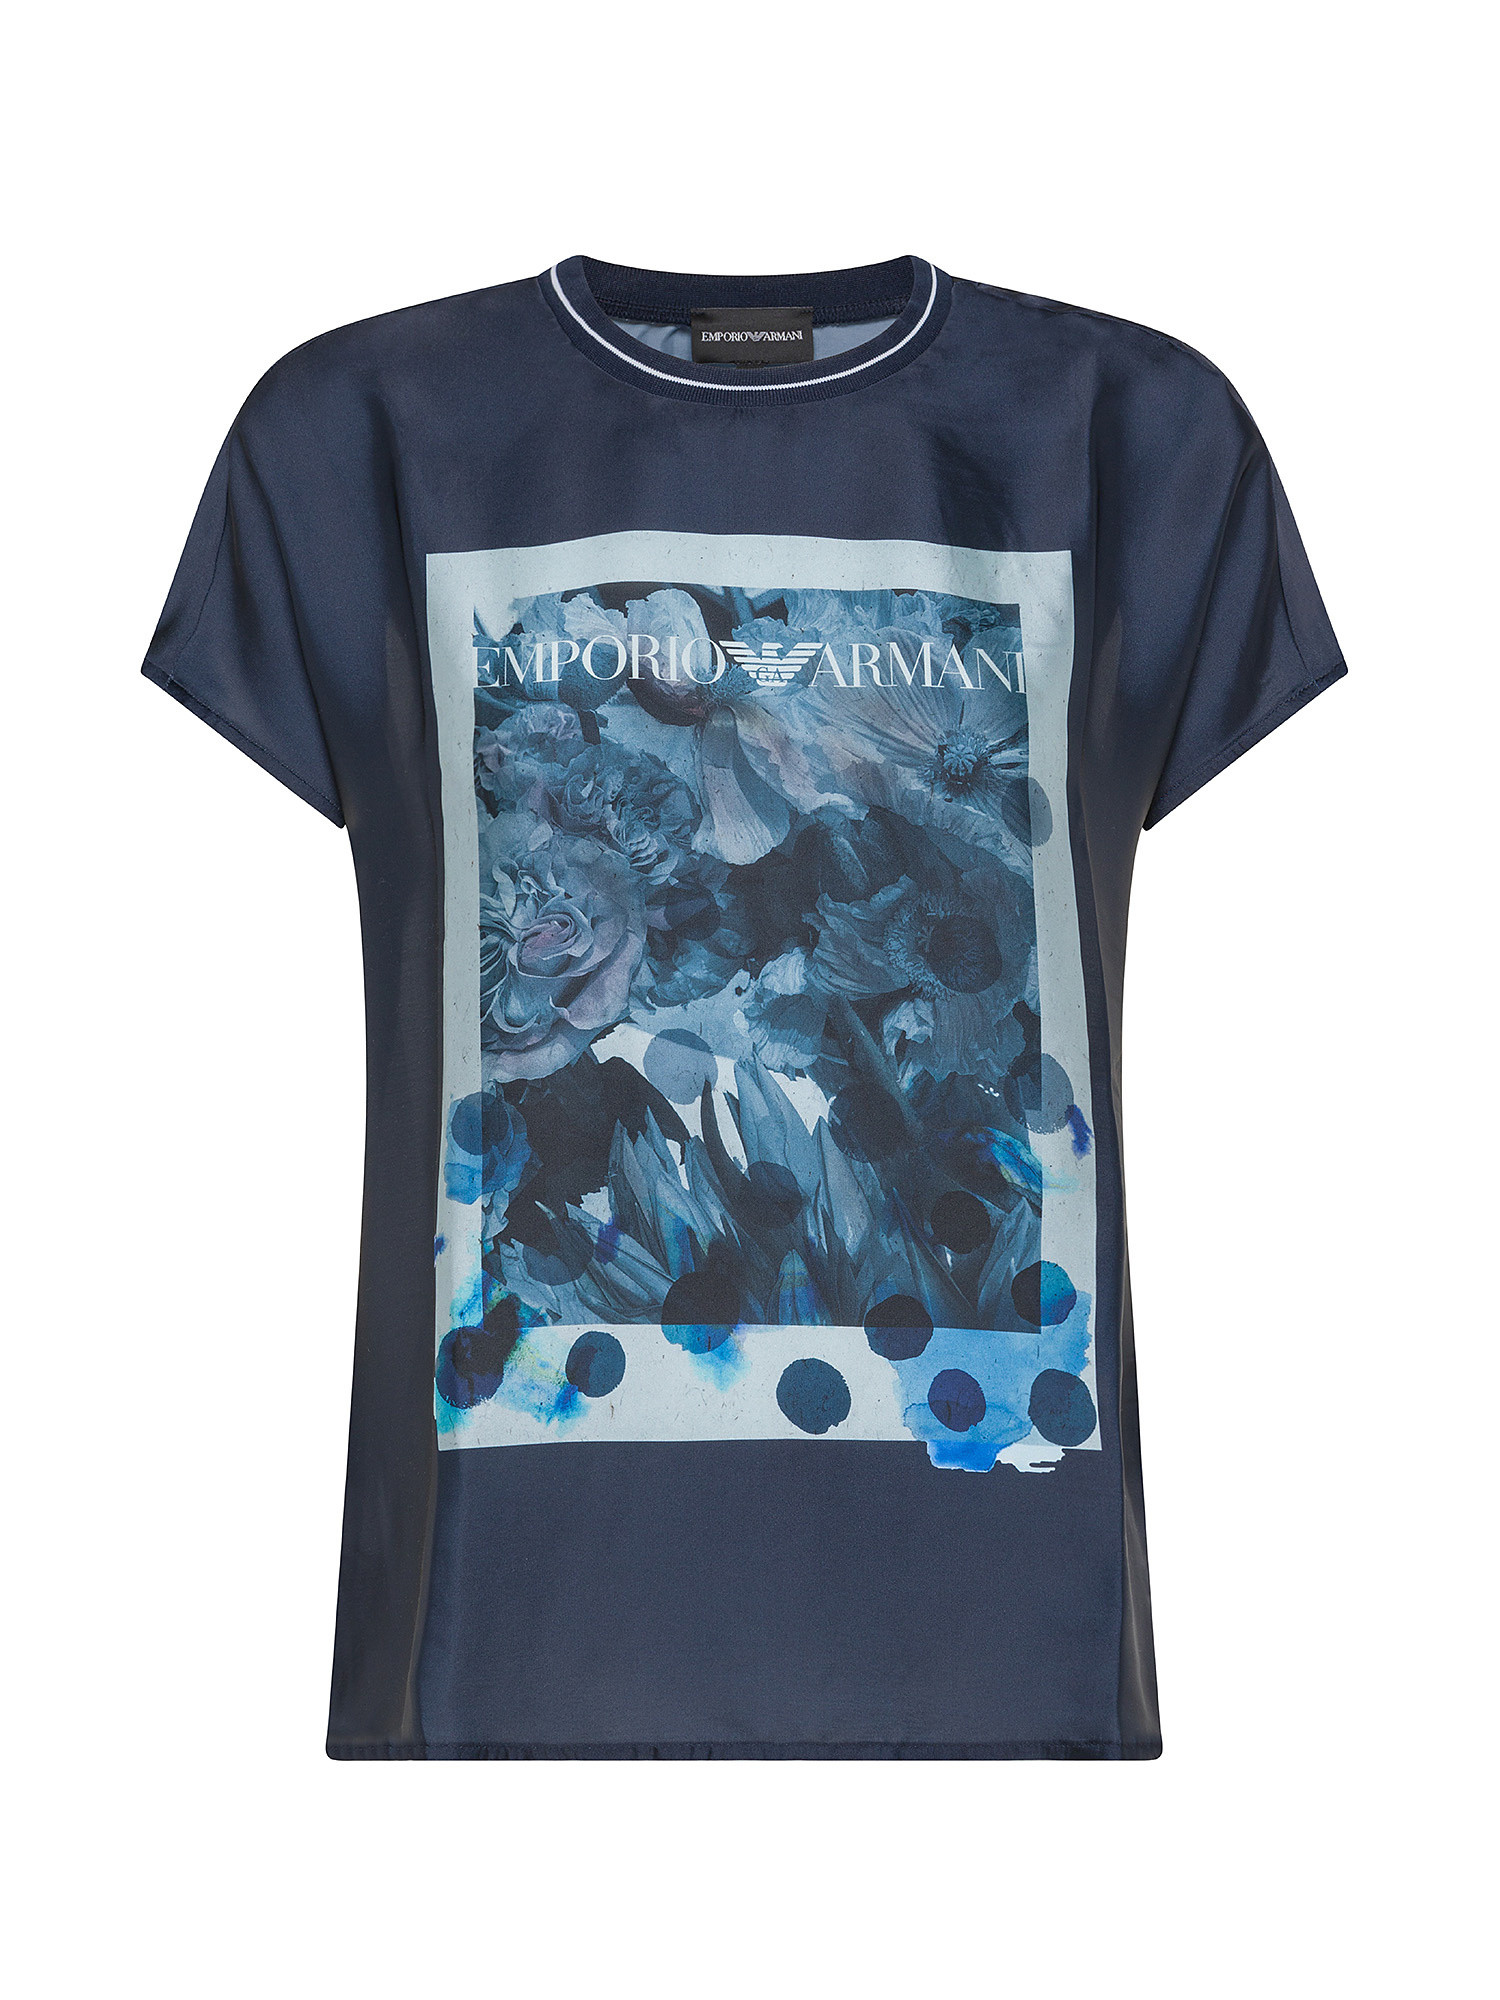 Emporio Armani - T-shirt con maxi stampa, Blu scuro, large image number 0